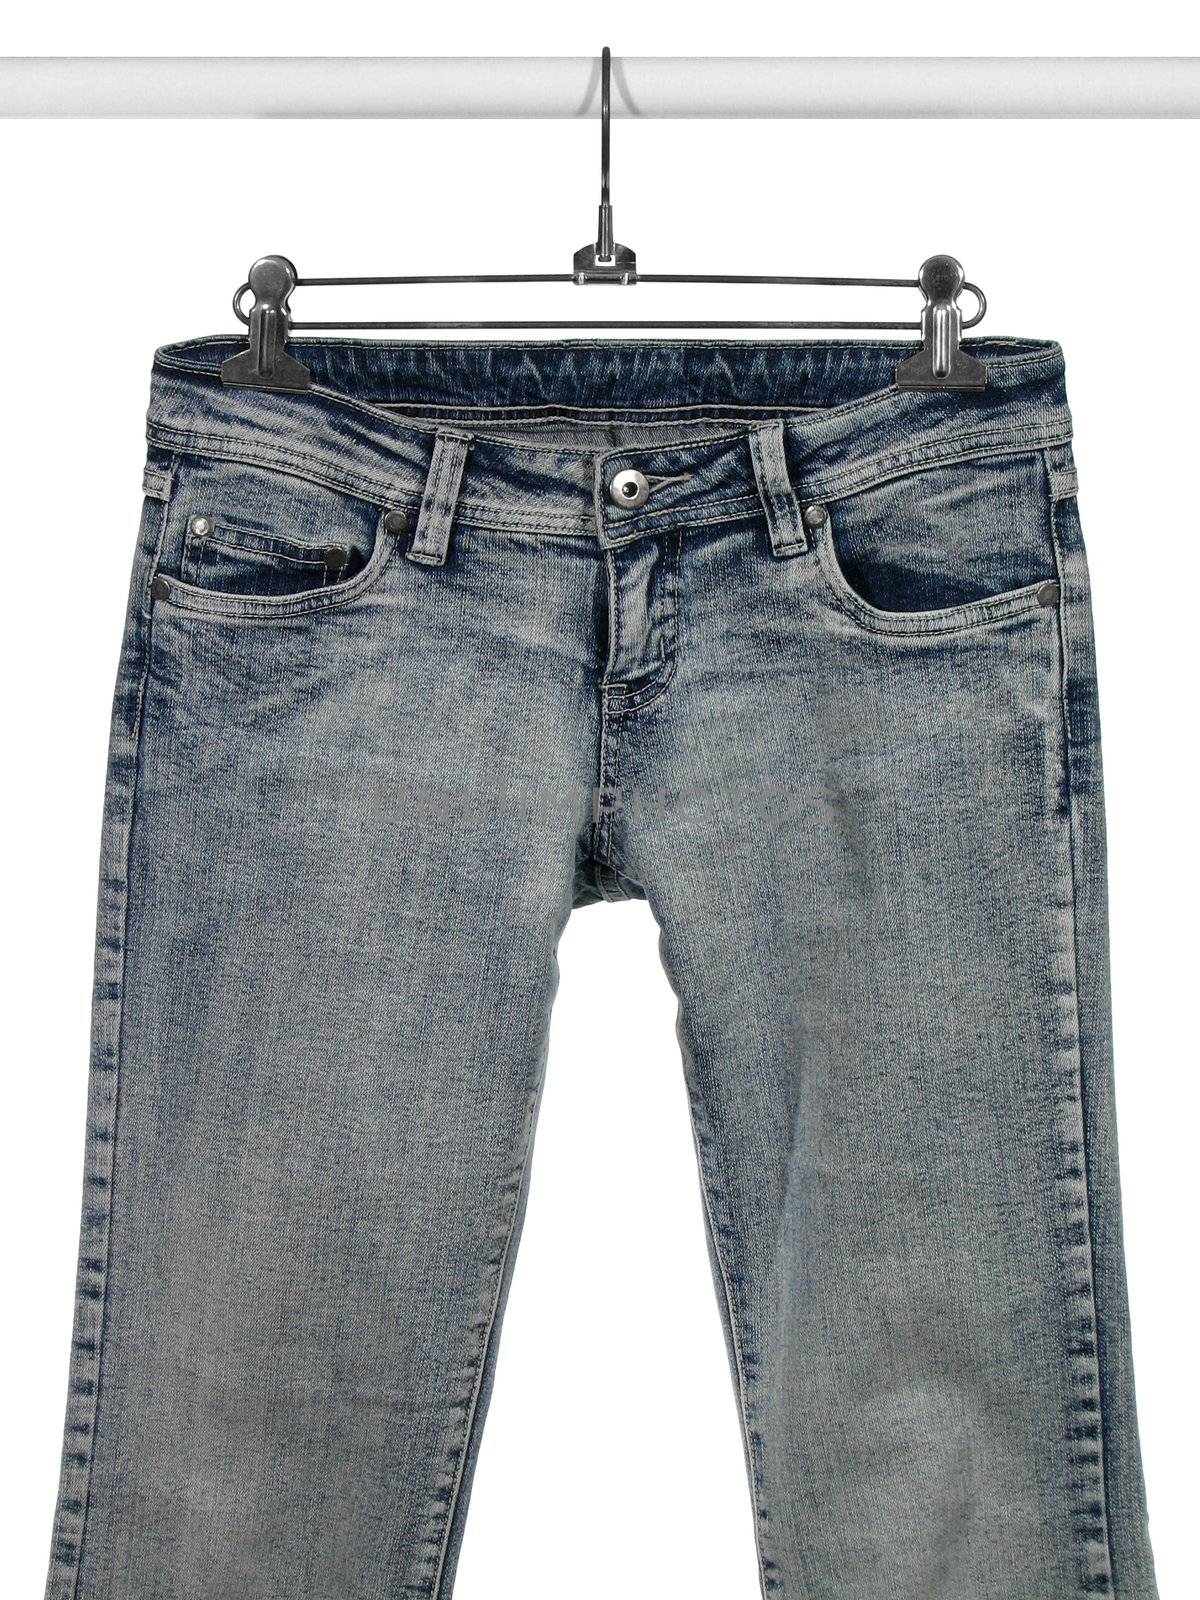 Blue jeans on a closet rod by anikasalsera